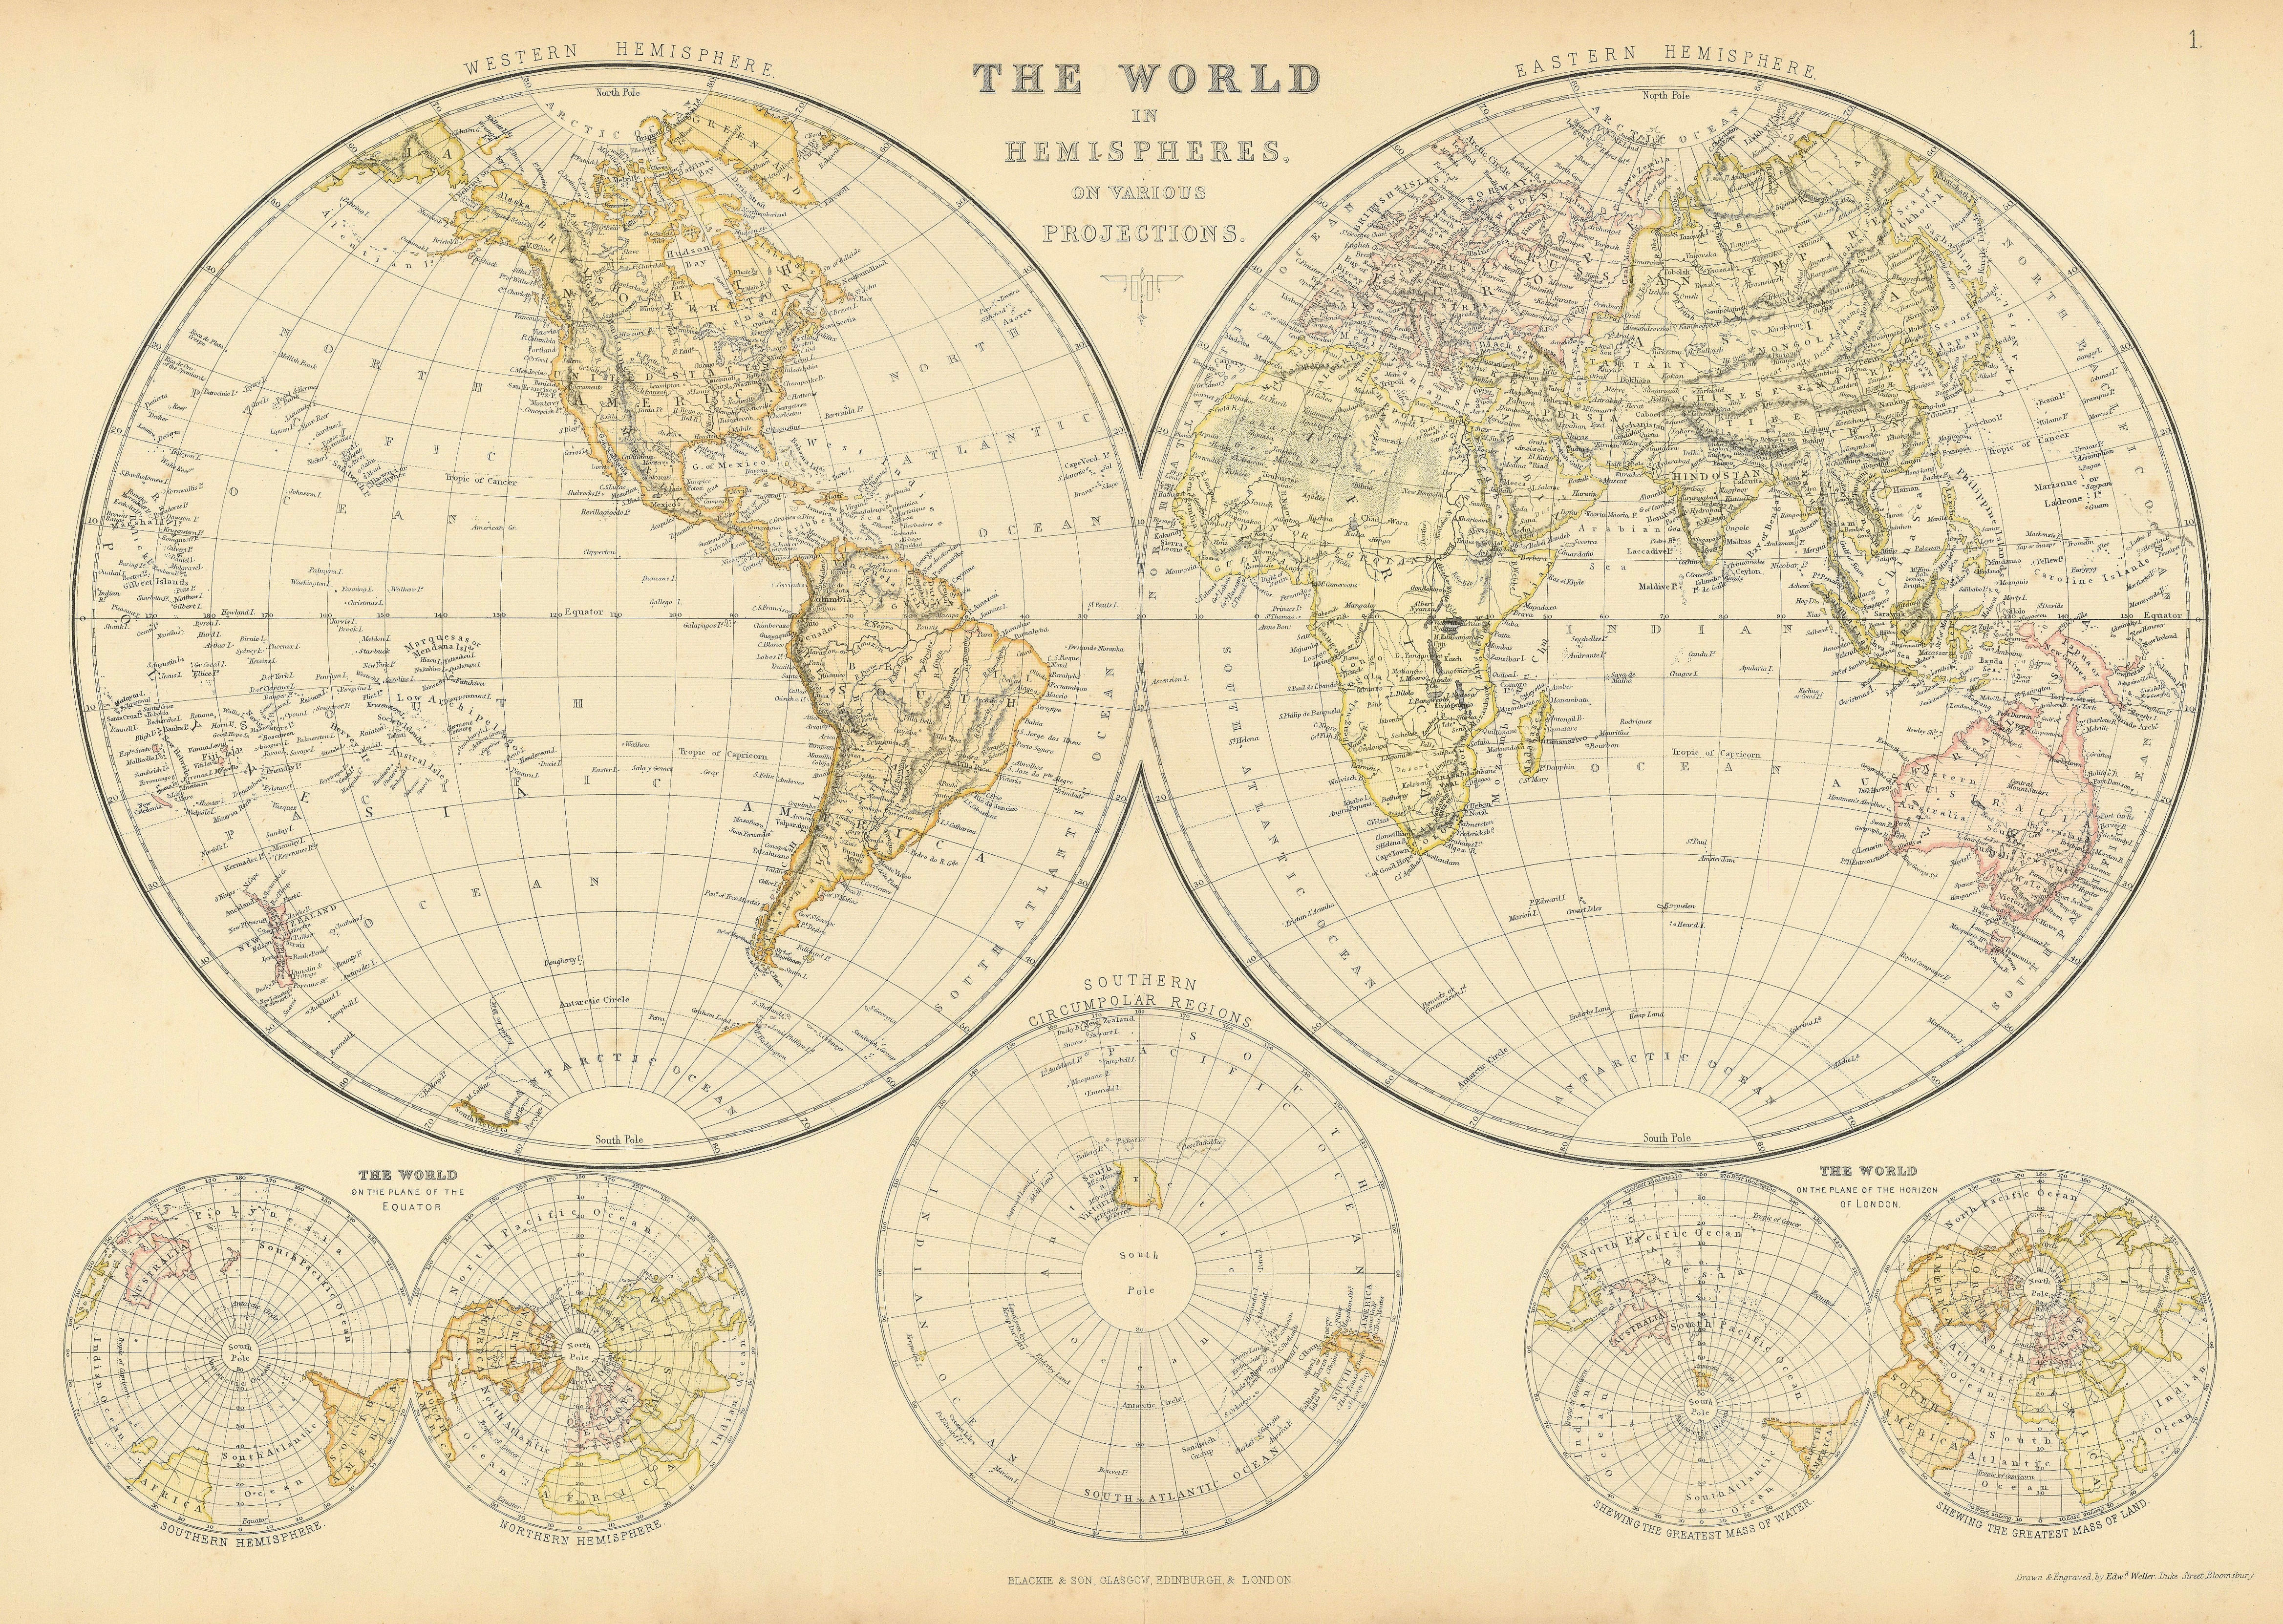 Associate Product WORLD IN HEMISPHERES. Equatorial Antarctic London planes. BLACKIE 1886 old map